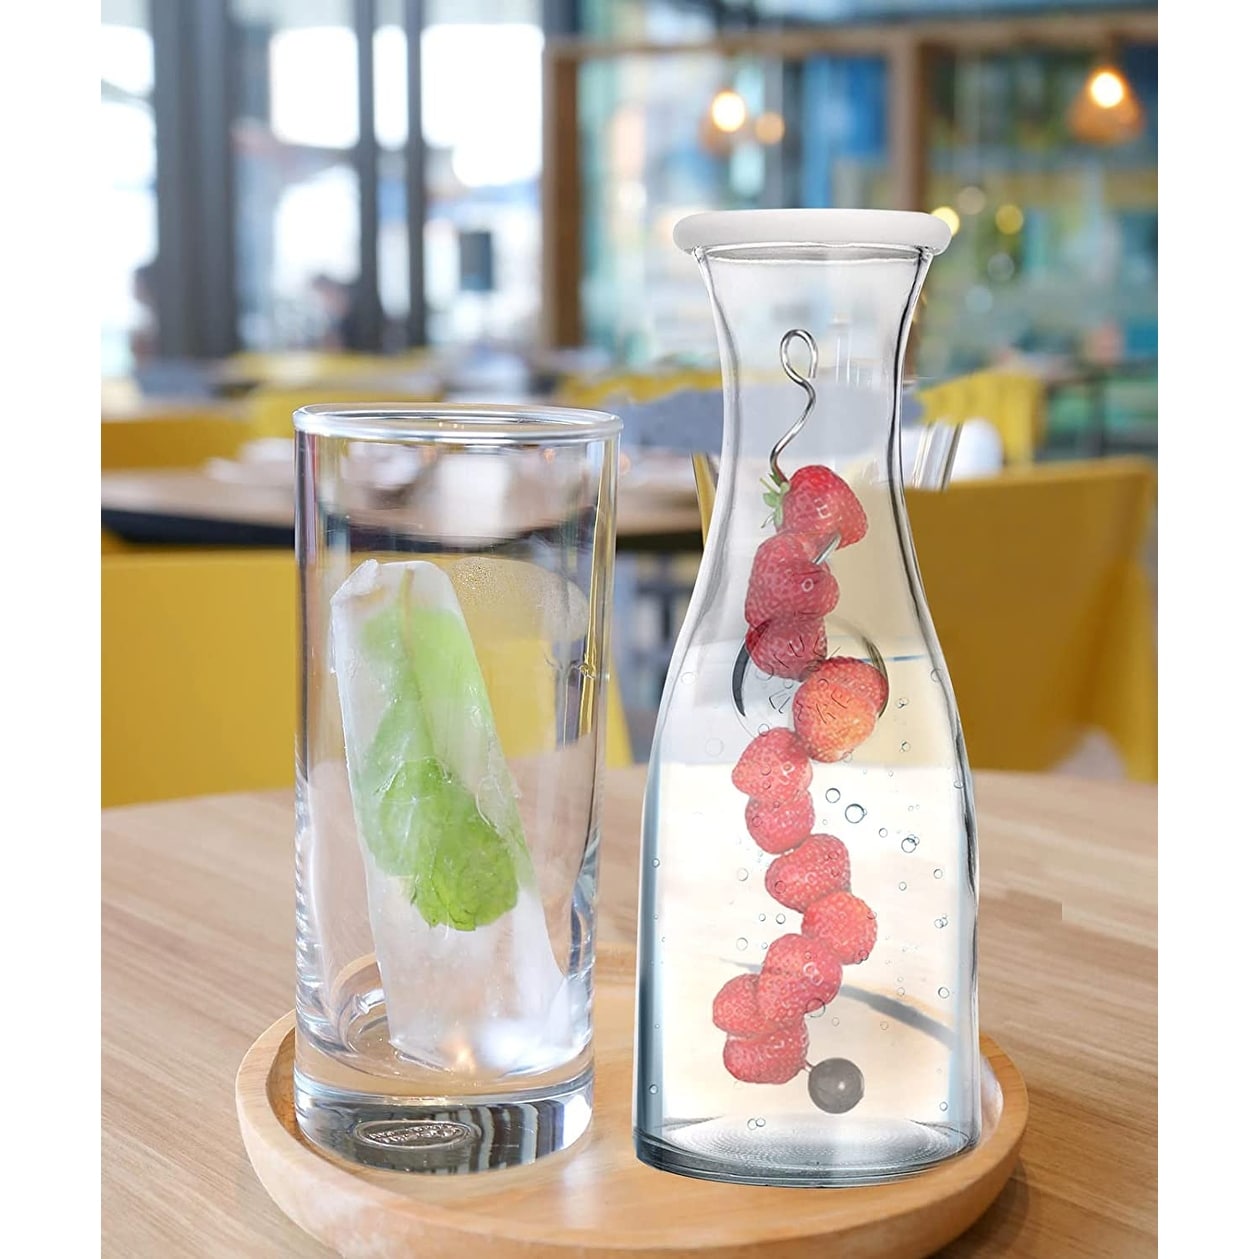 Glass Carafe Pitcher - 34oz Water Carafe Set for Mimosa Bar